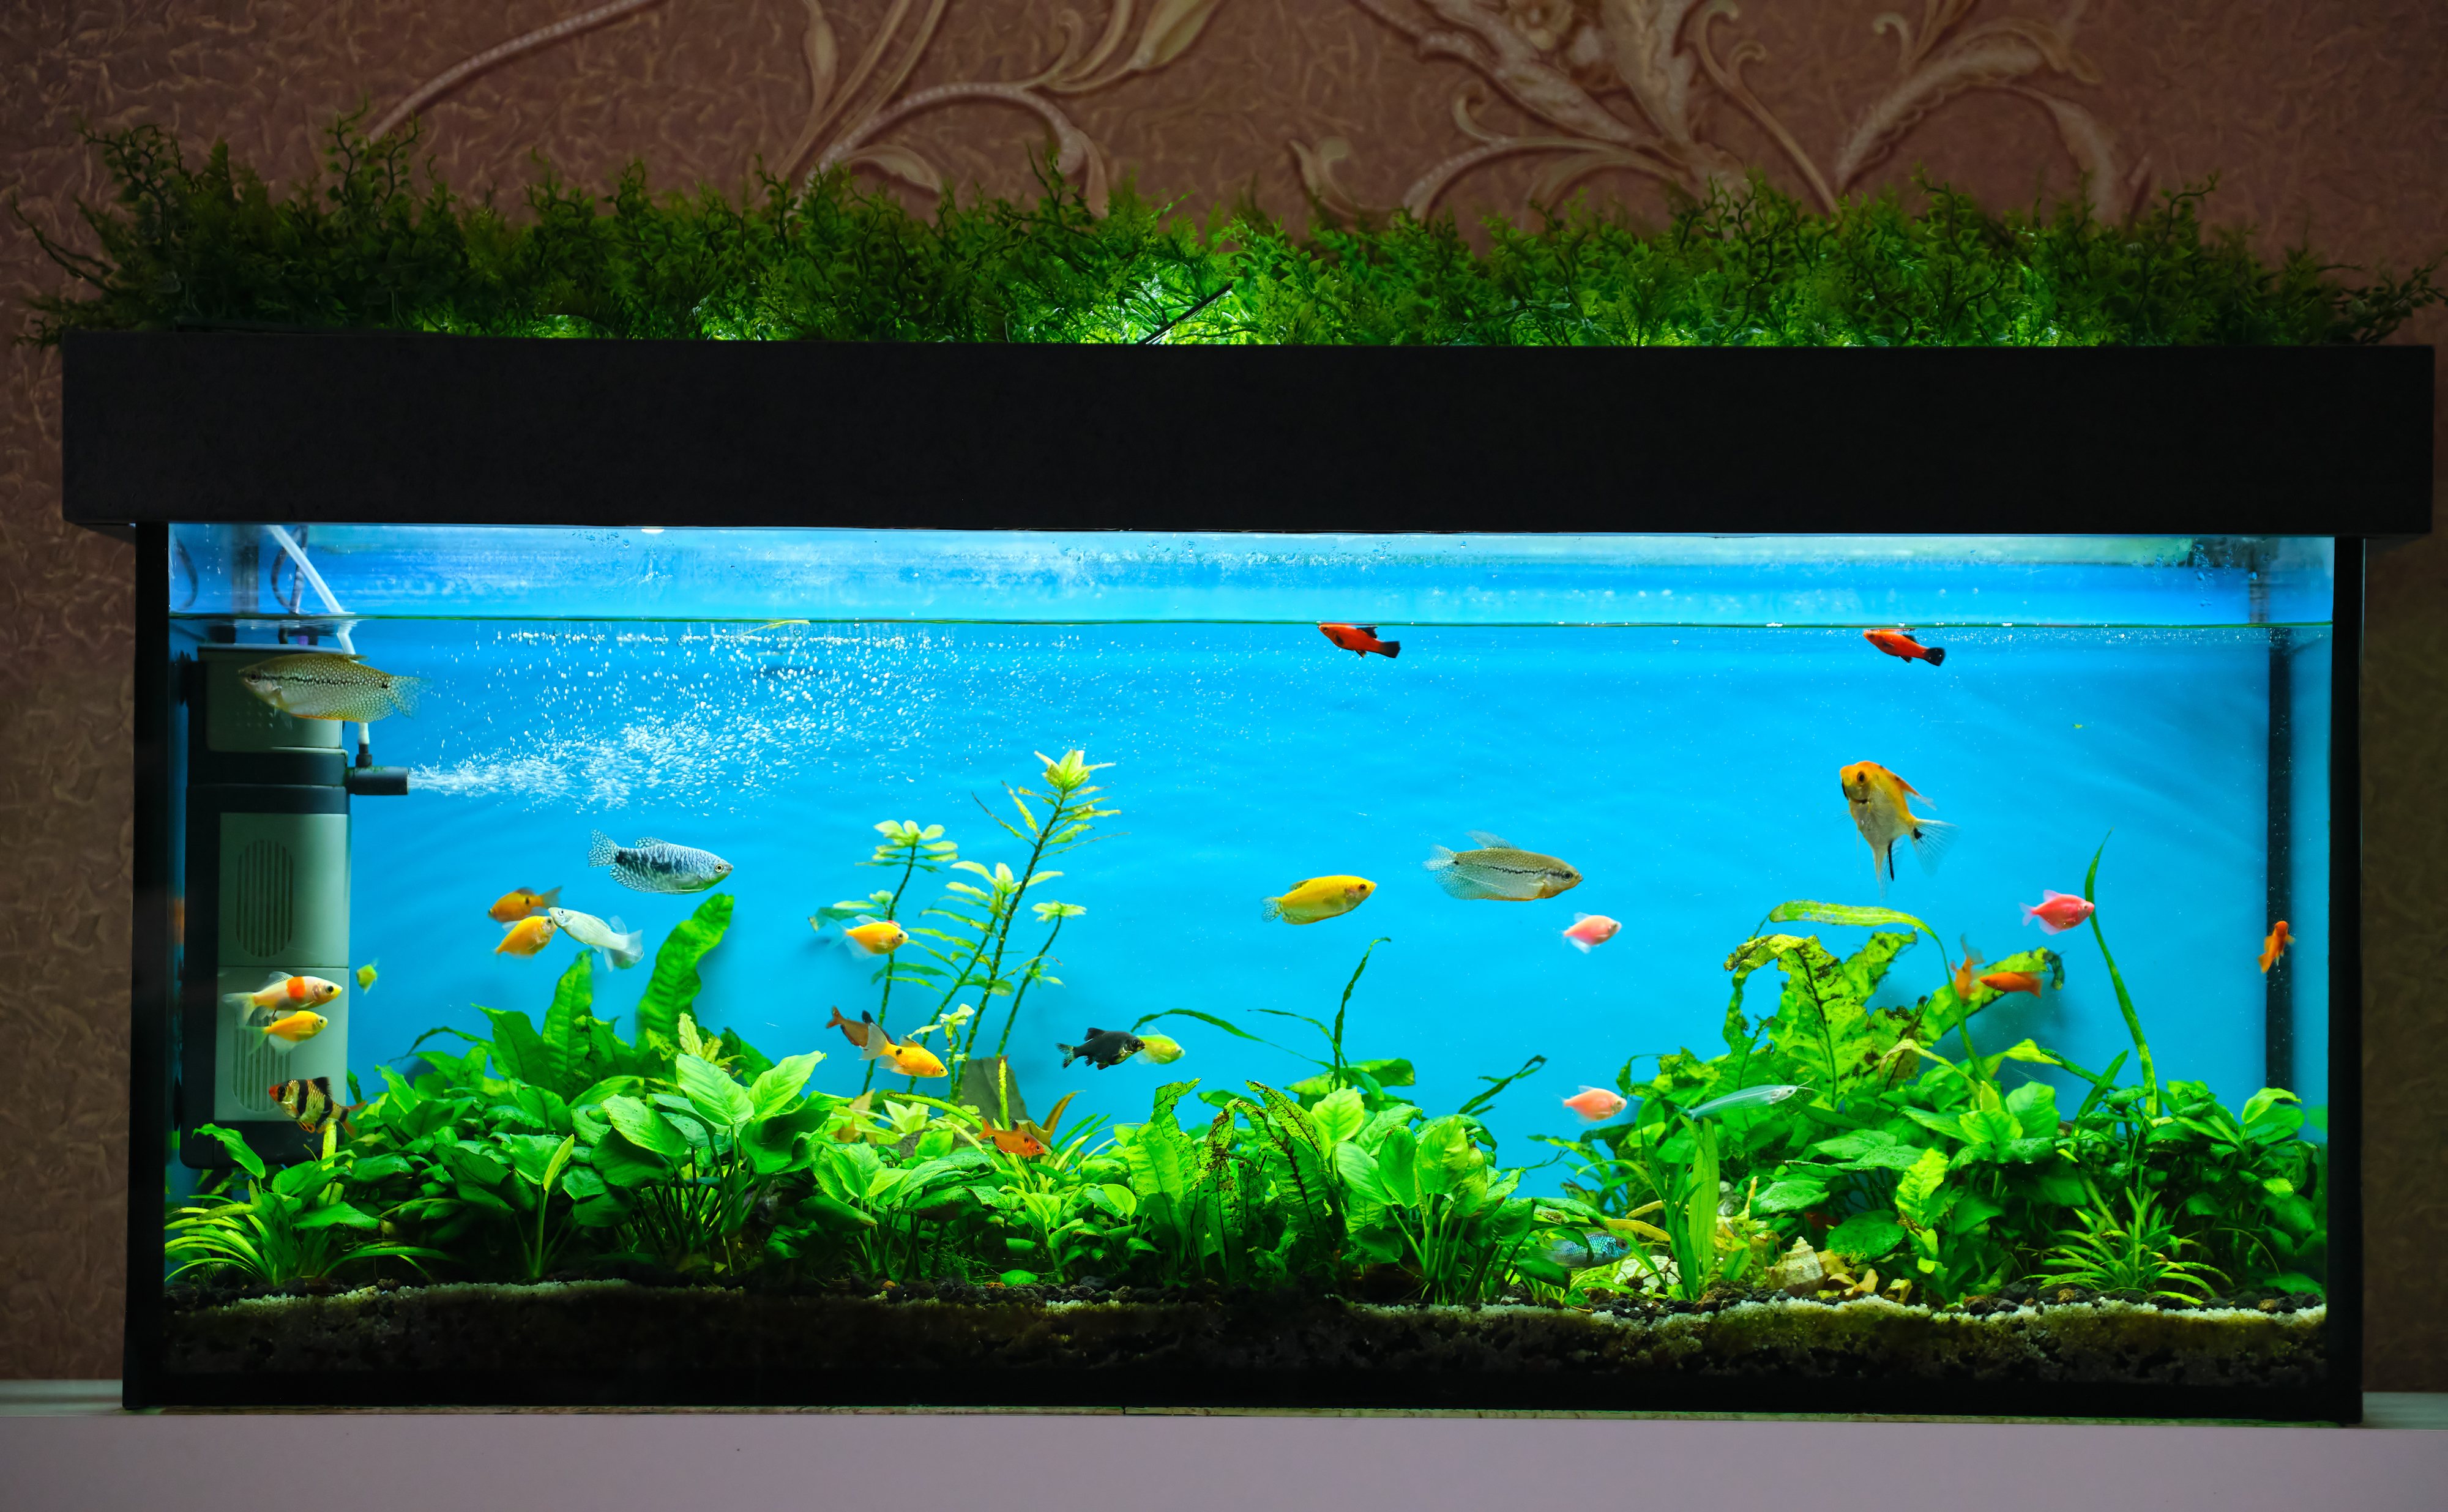 goldfish in a tank